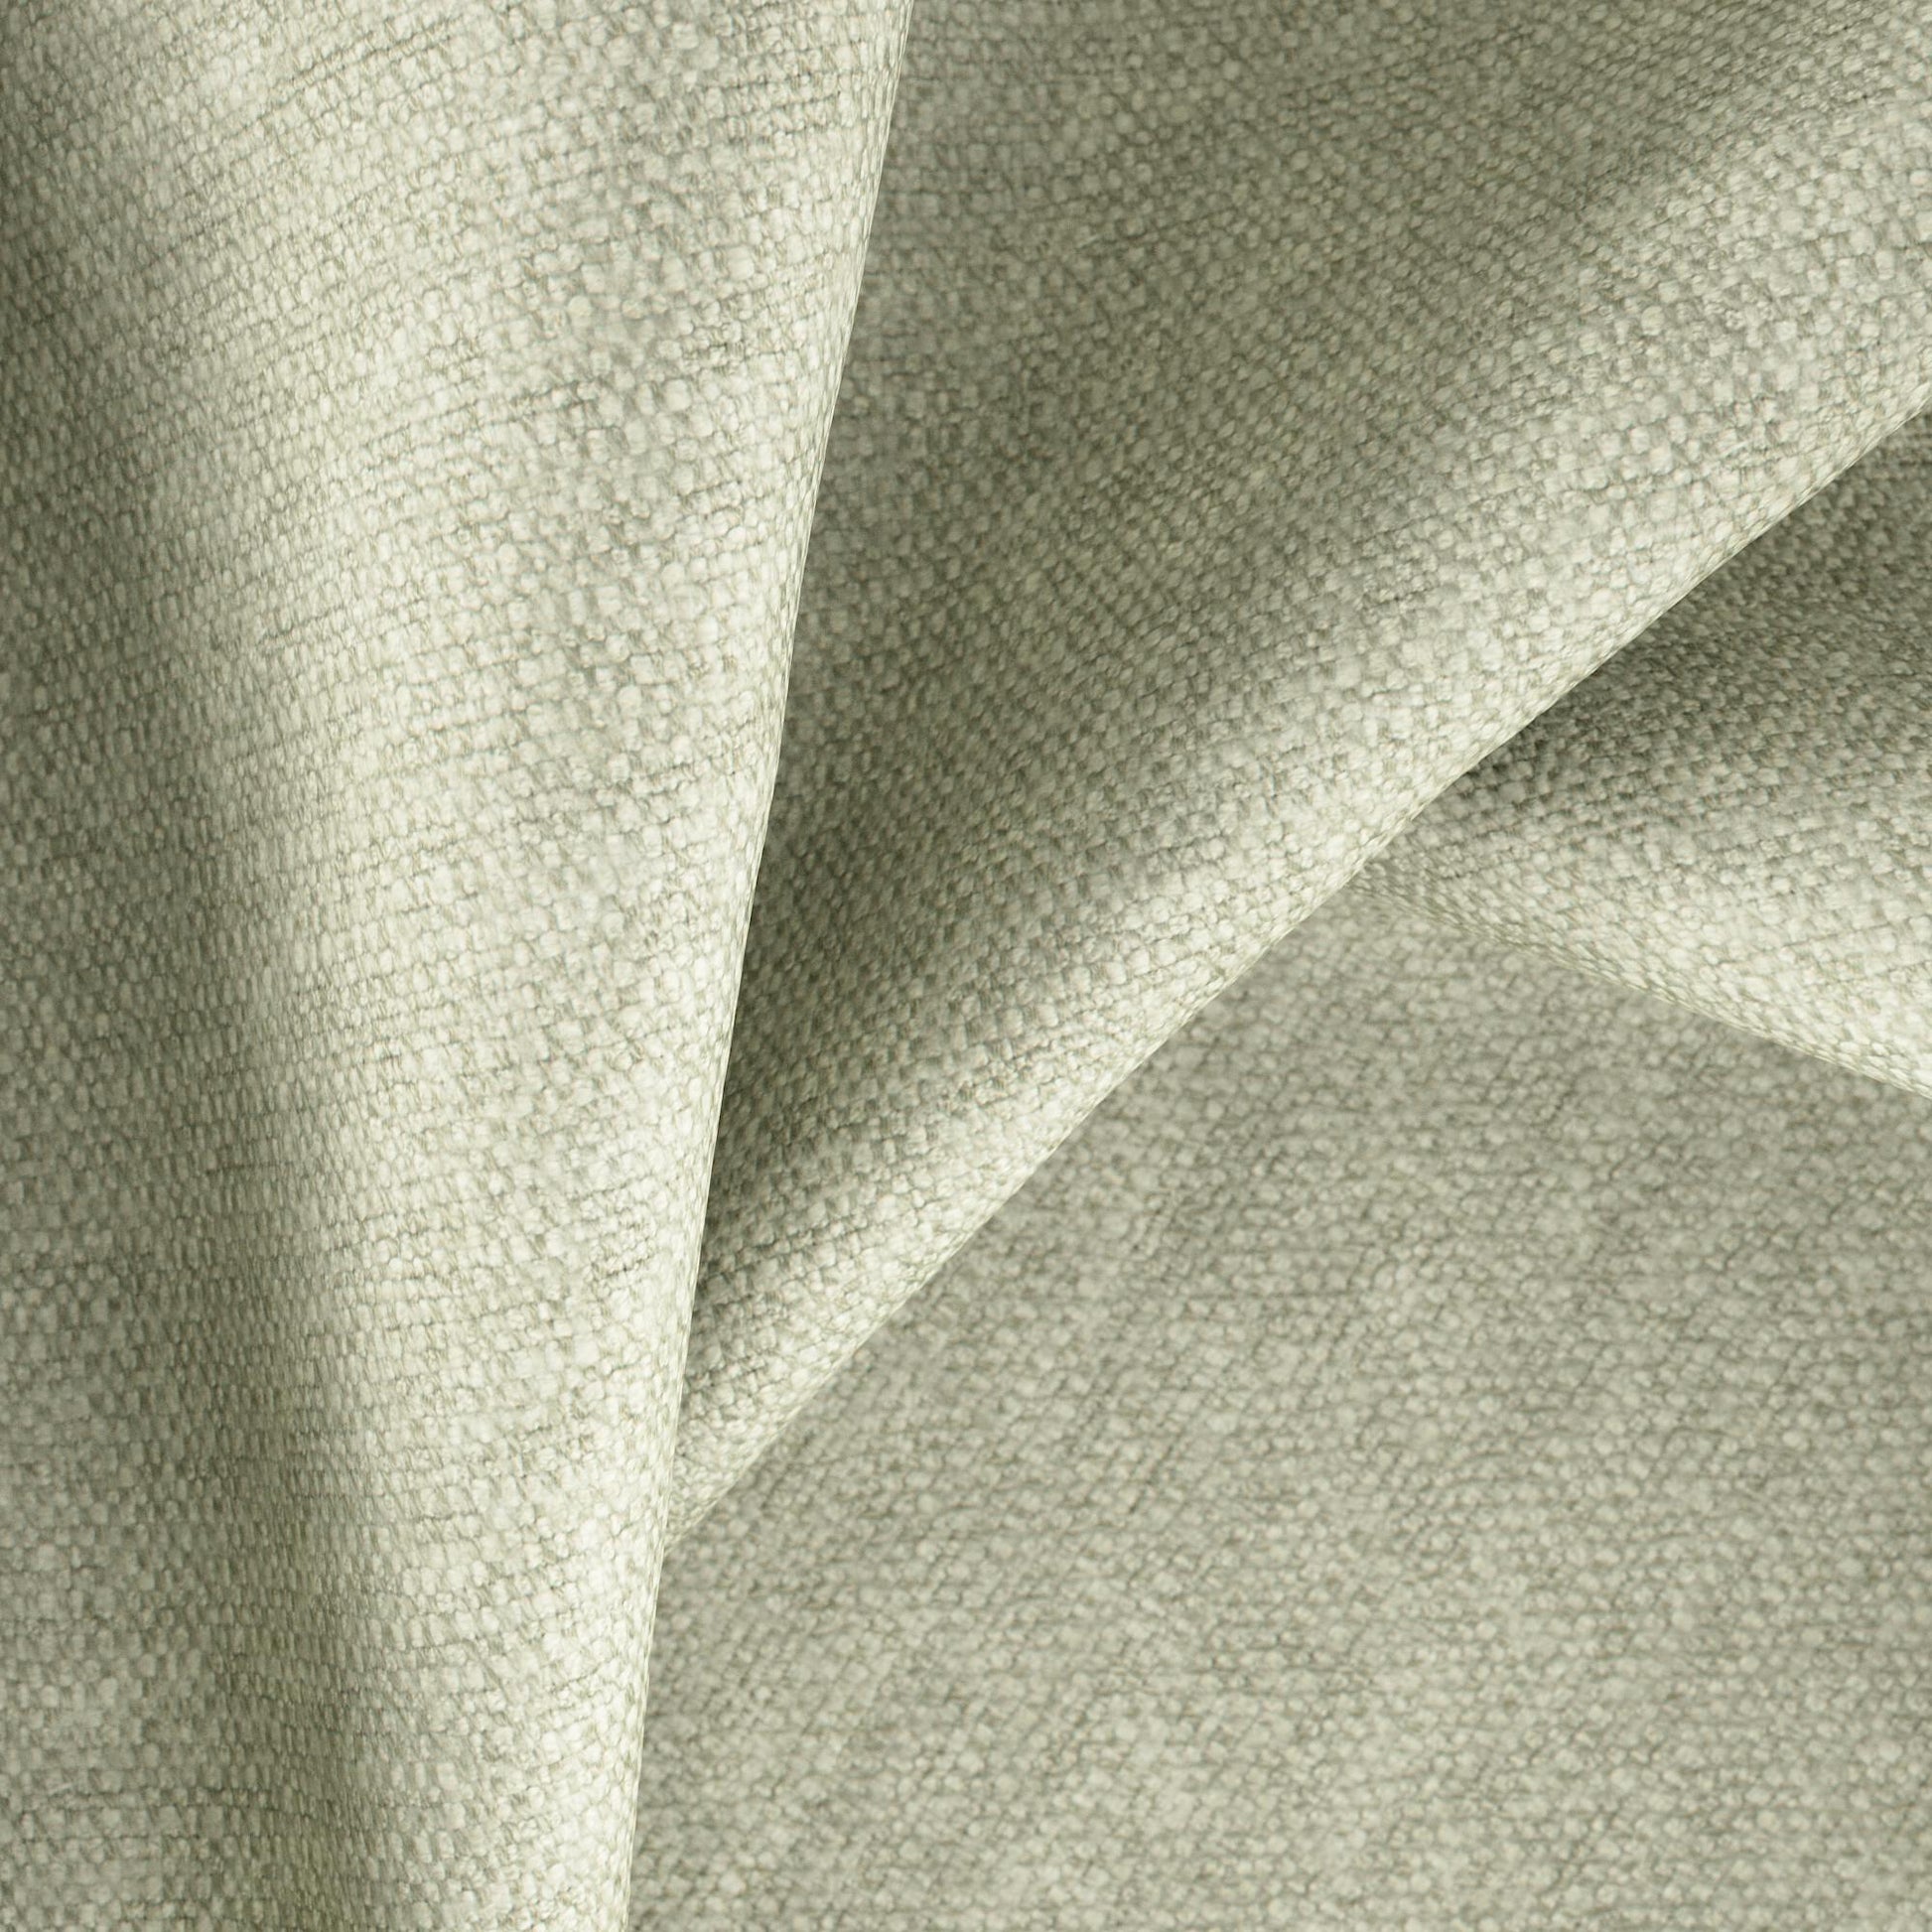 Home Fabrics - FibreGuard - Colourwash - 21-Pesto - Fabric per Meter